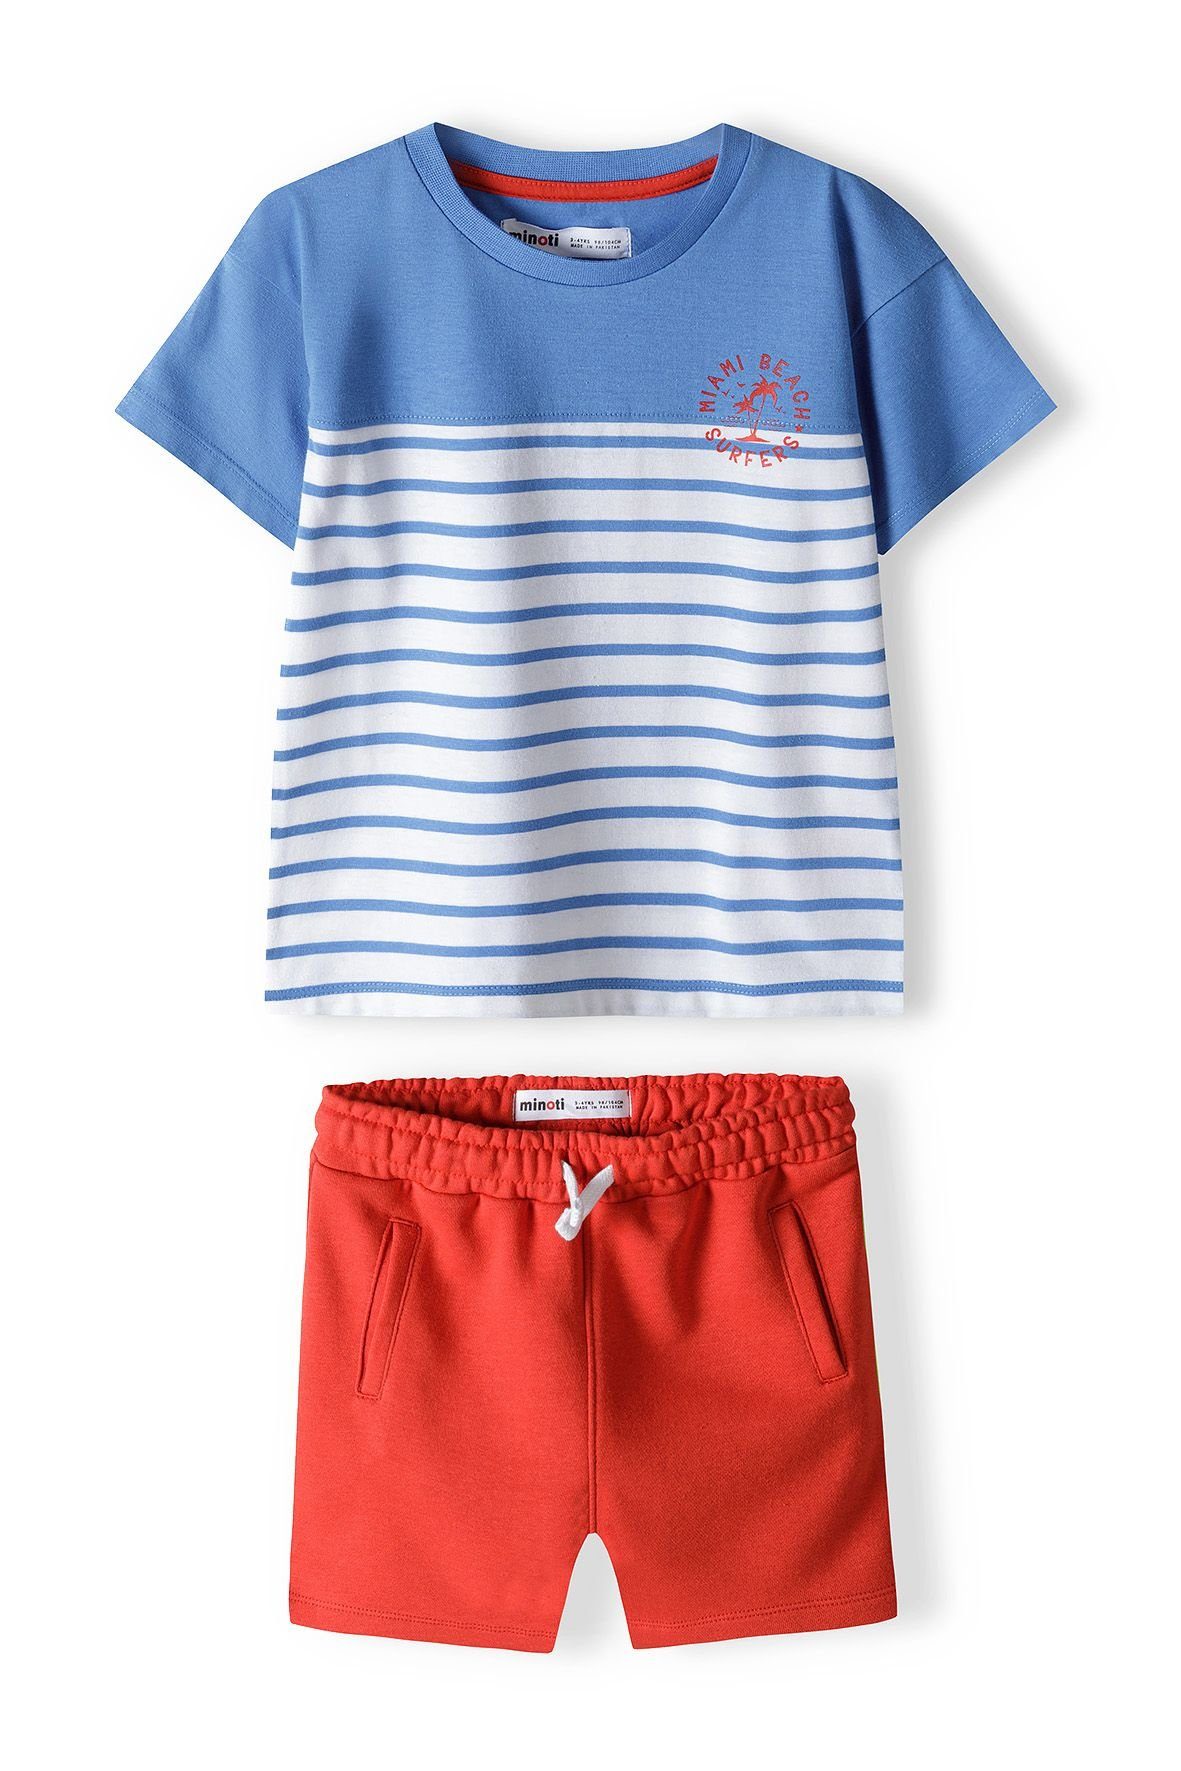 MINOTI T-Shirt & Sweatbermudas T-Shirt und Shorts Set (12m-8y) Rot